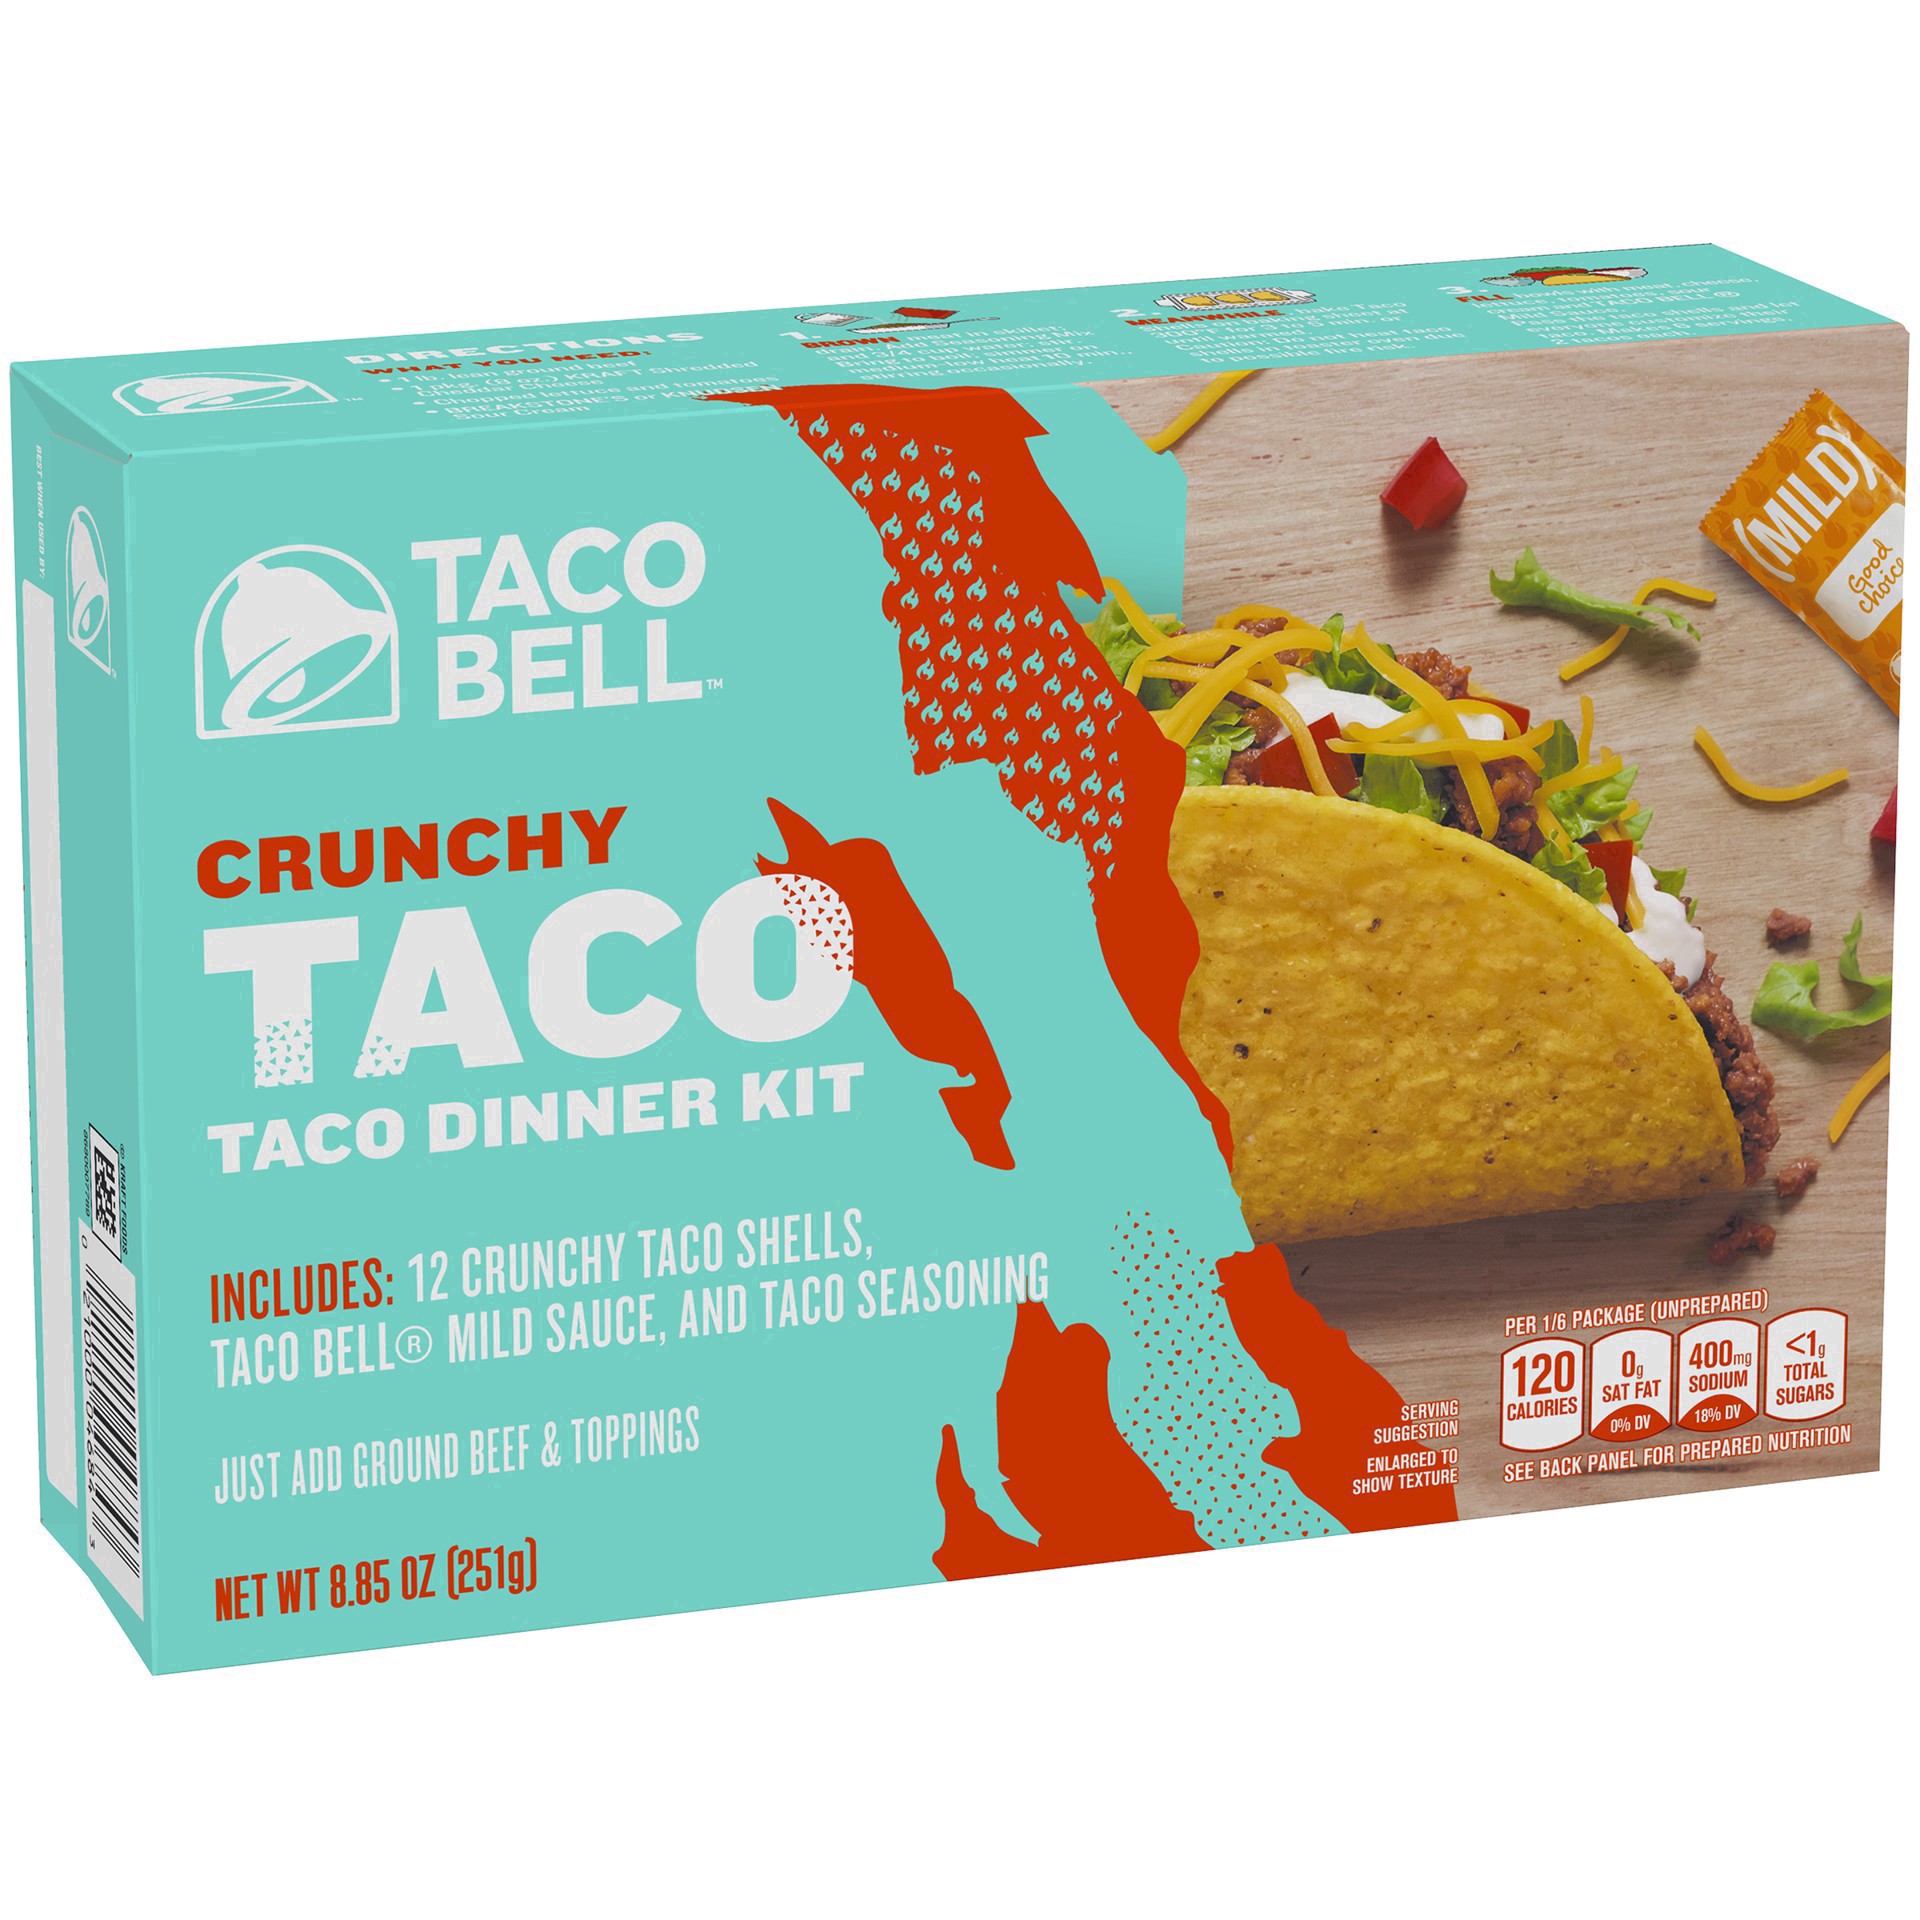 slide 18 of 91, Taco Bell Crunchy Taco Cravings Kit with 12 Crunchy Taco Shells, Taco Bell Mild Sauce & Seasoning, 8.85 oz Box, 1 ct